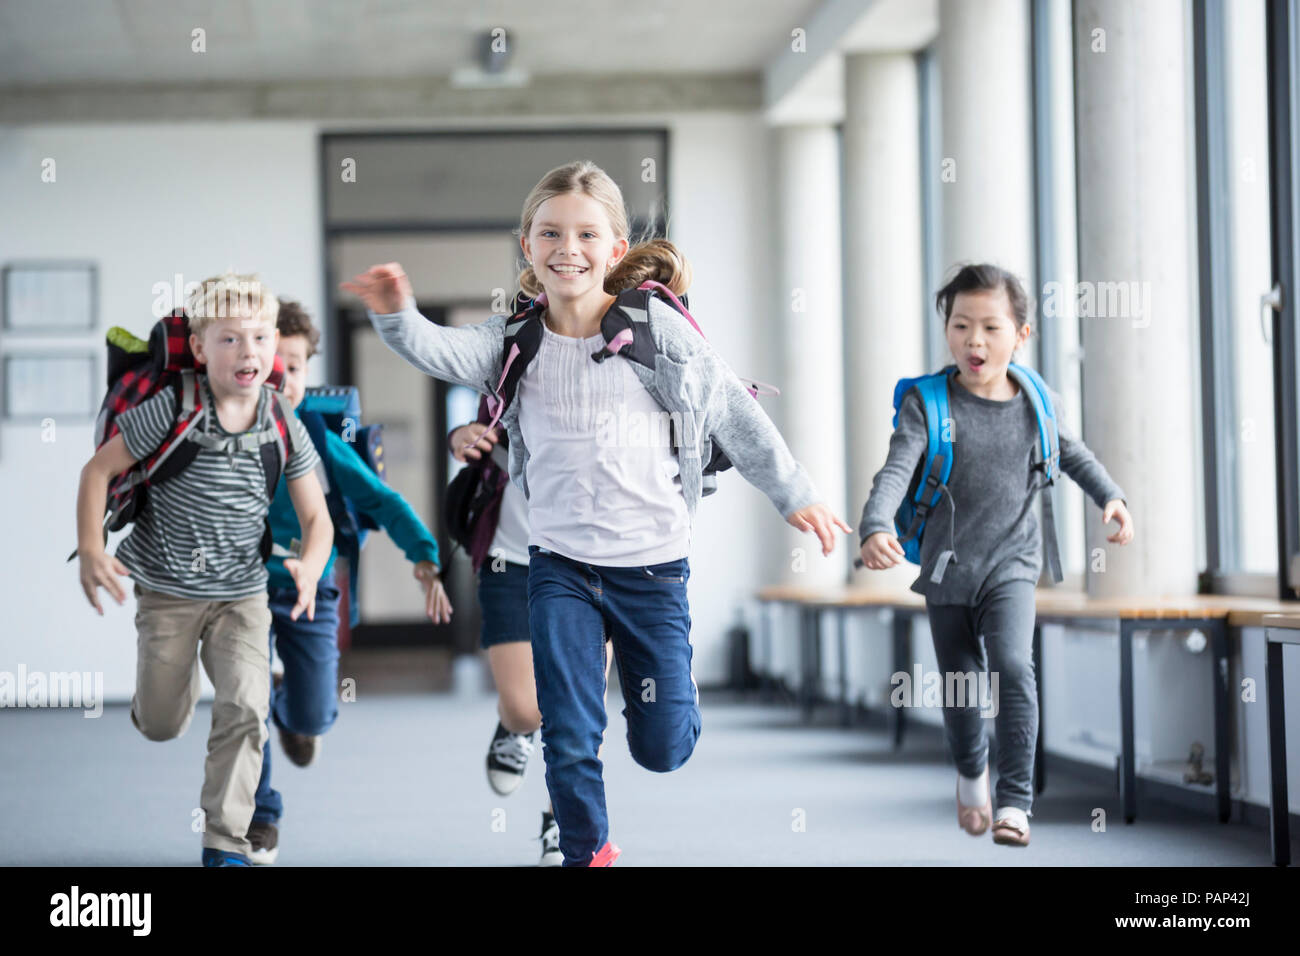 Excited pupils rushing down school corridor Stock Photo